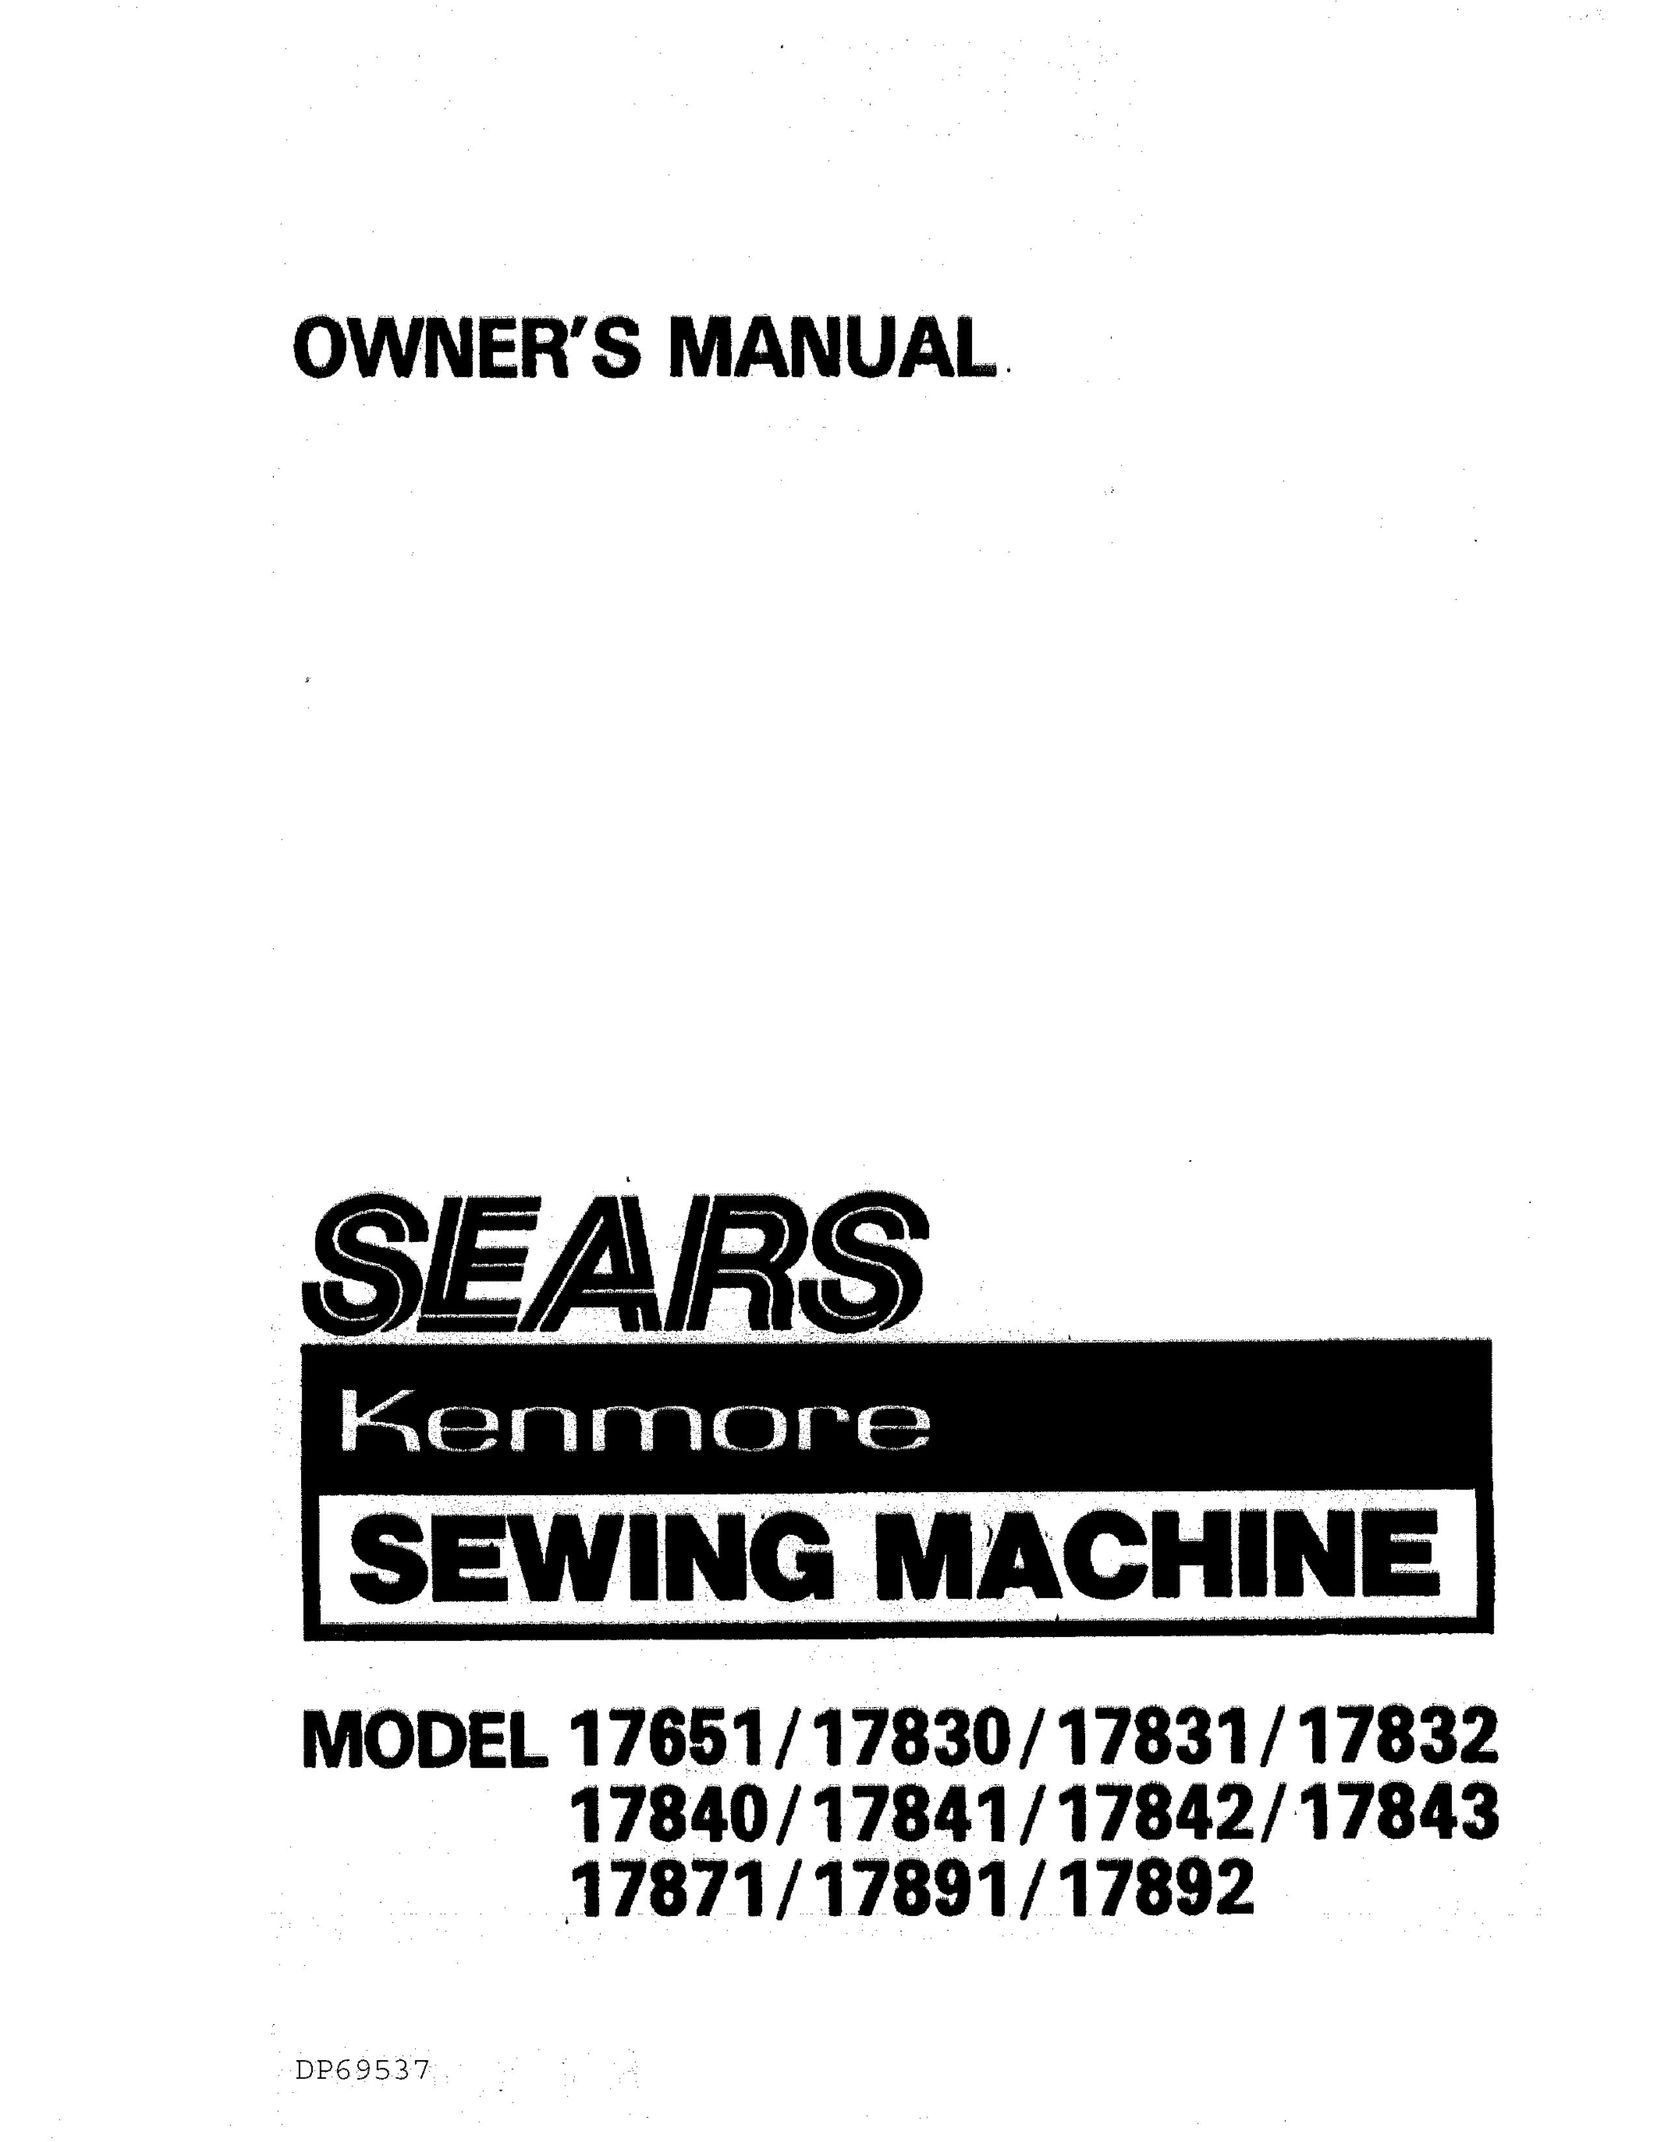 Sears 17840 Sewing Machine User Manual